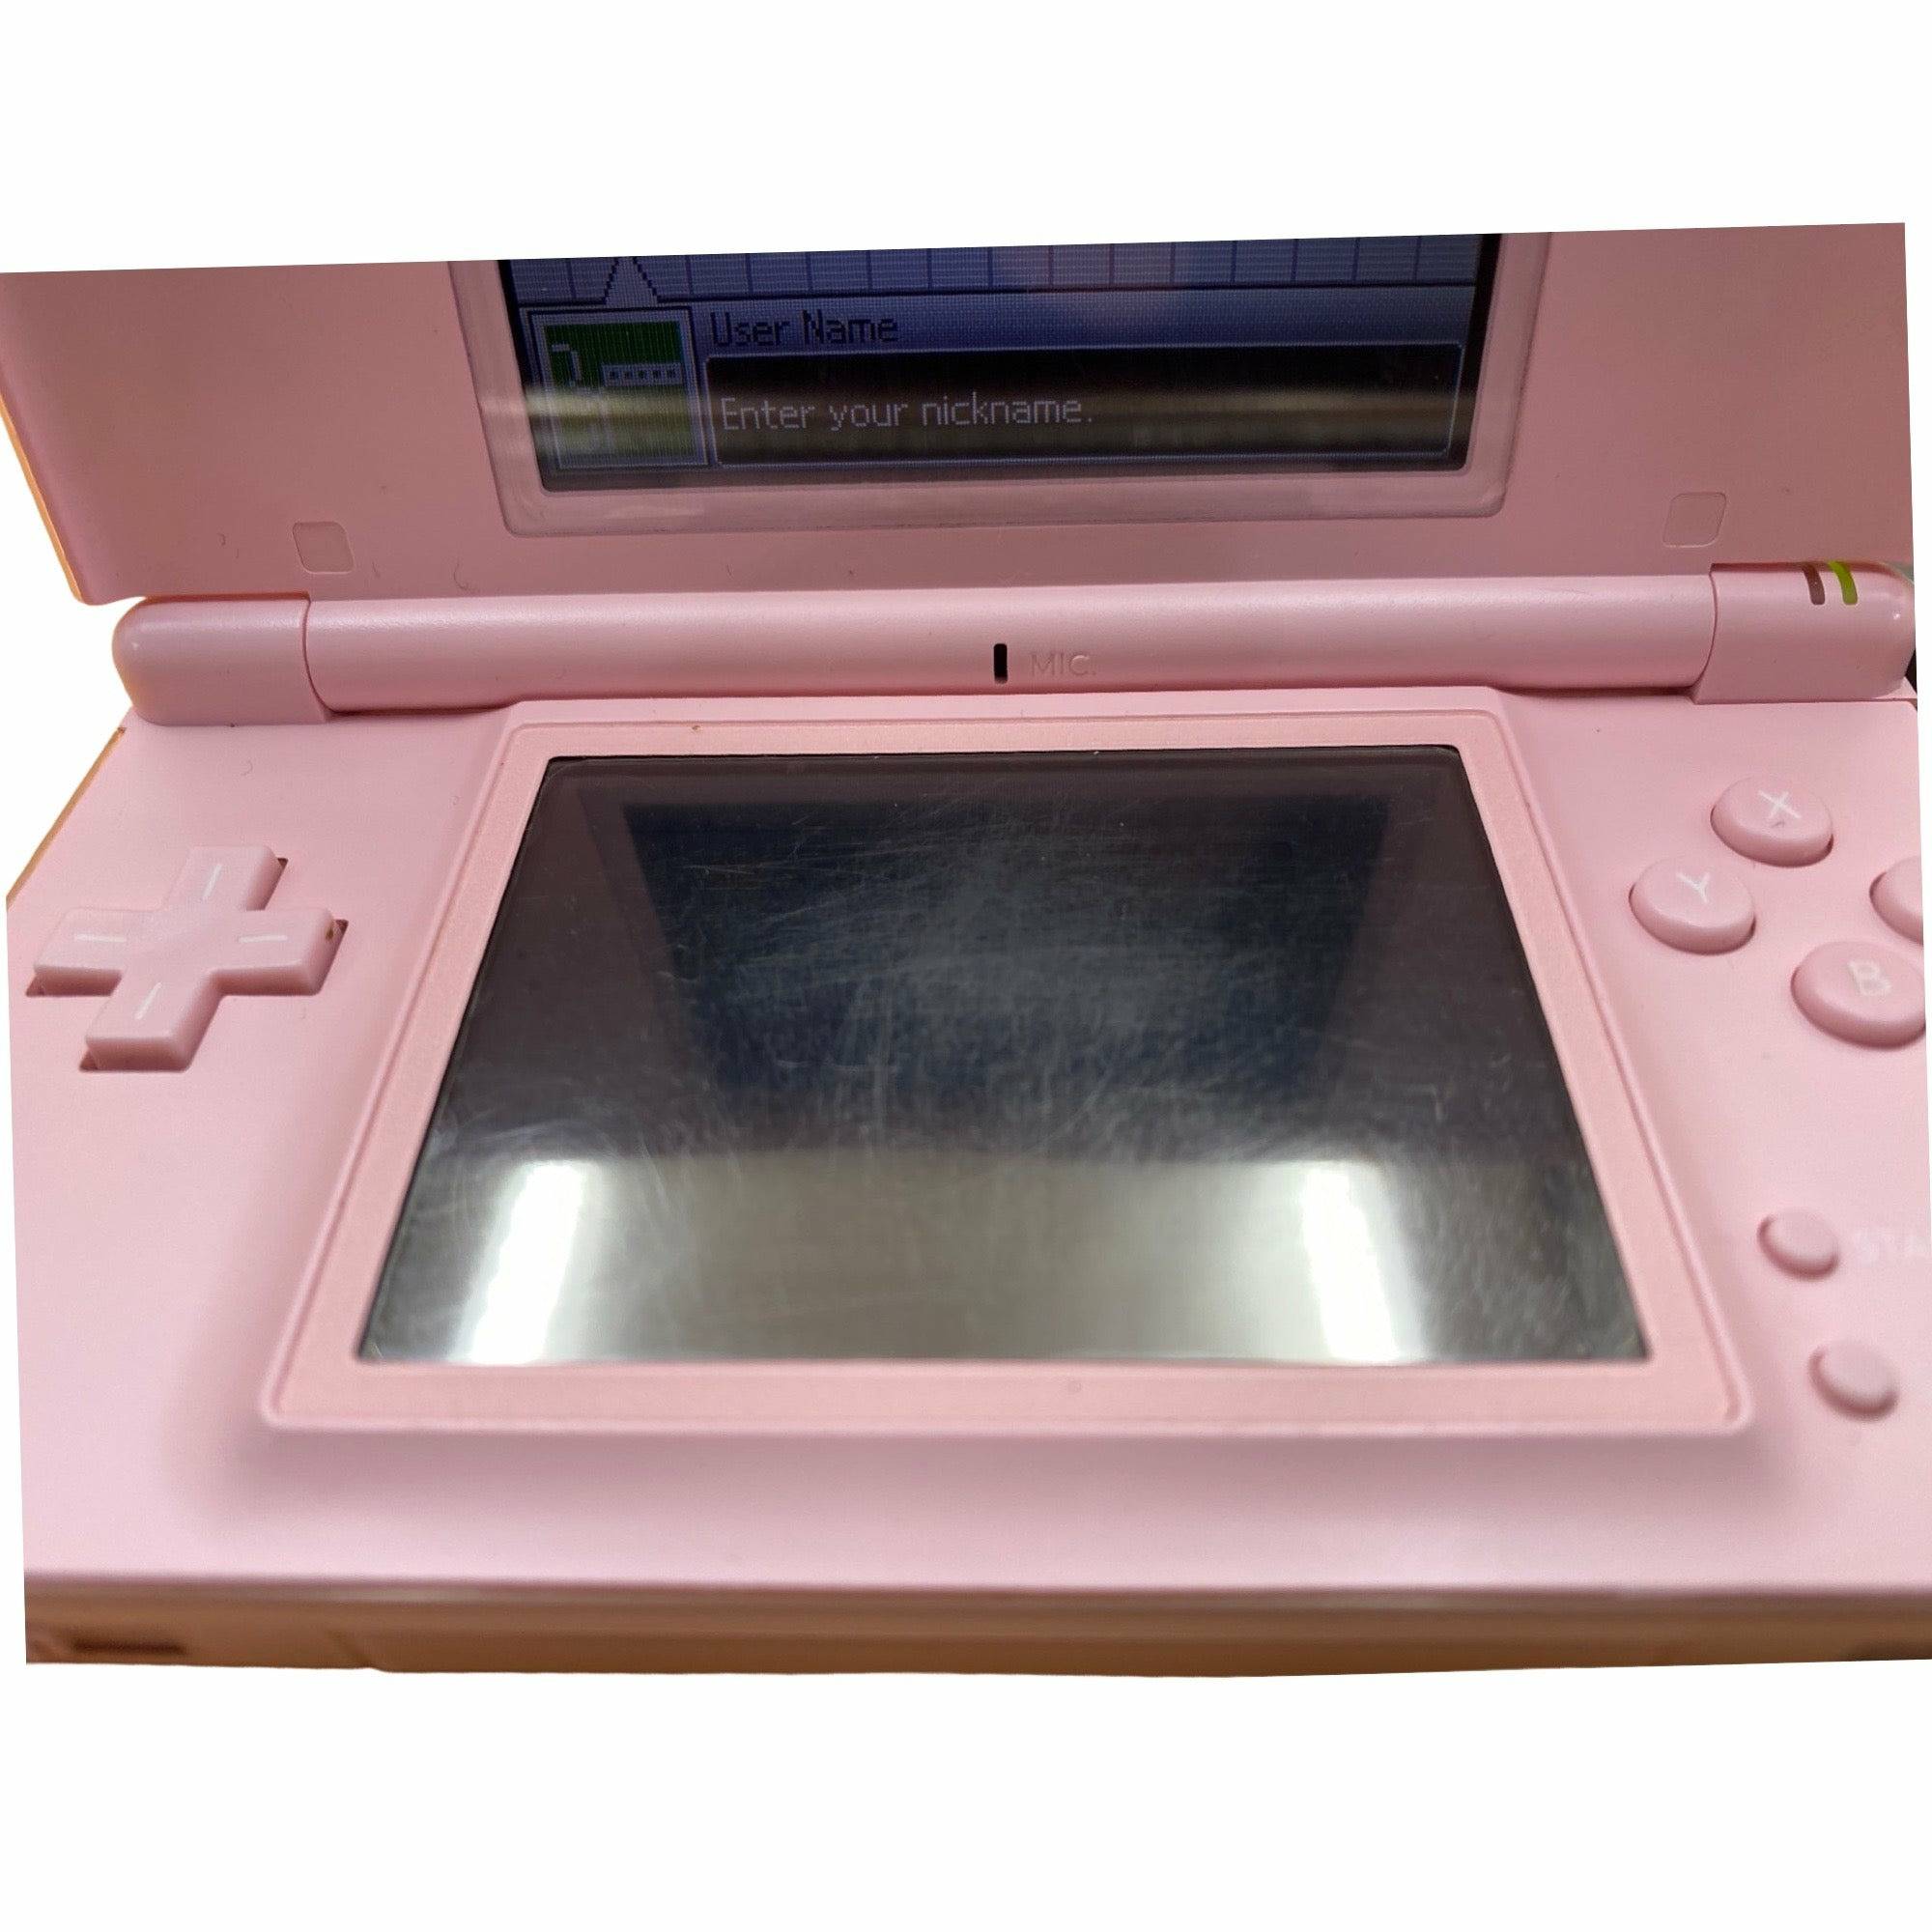 ler Vanvid anker Coral Pink Nintendo DS Lite (With Pokemon Pearl)| Retro Gaming of Denver